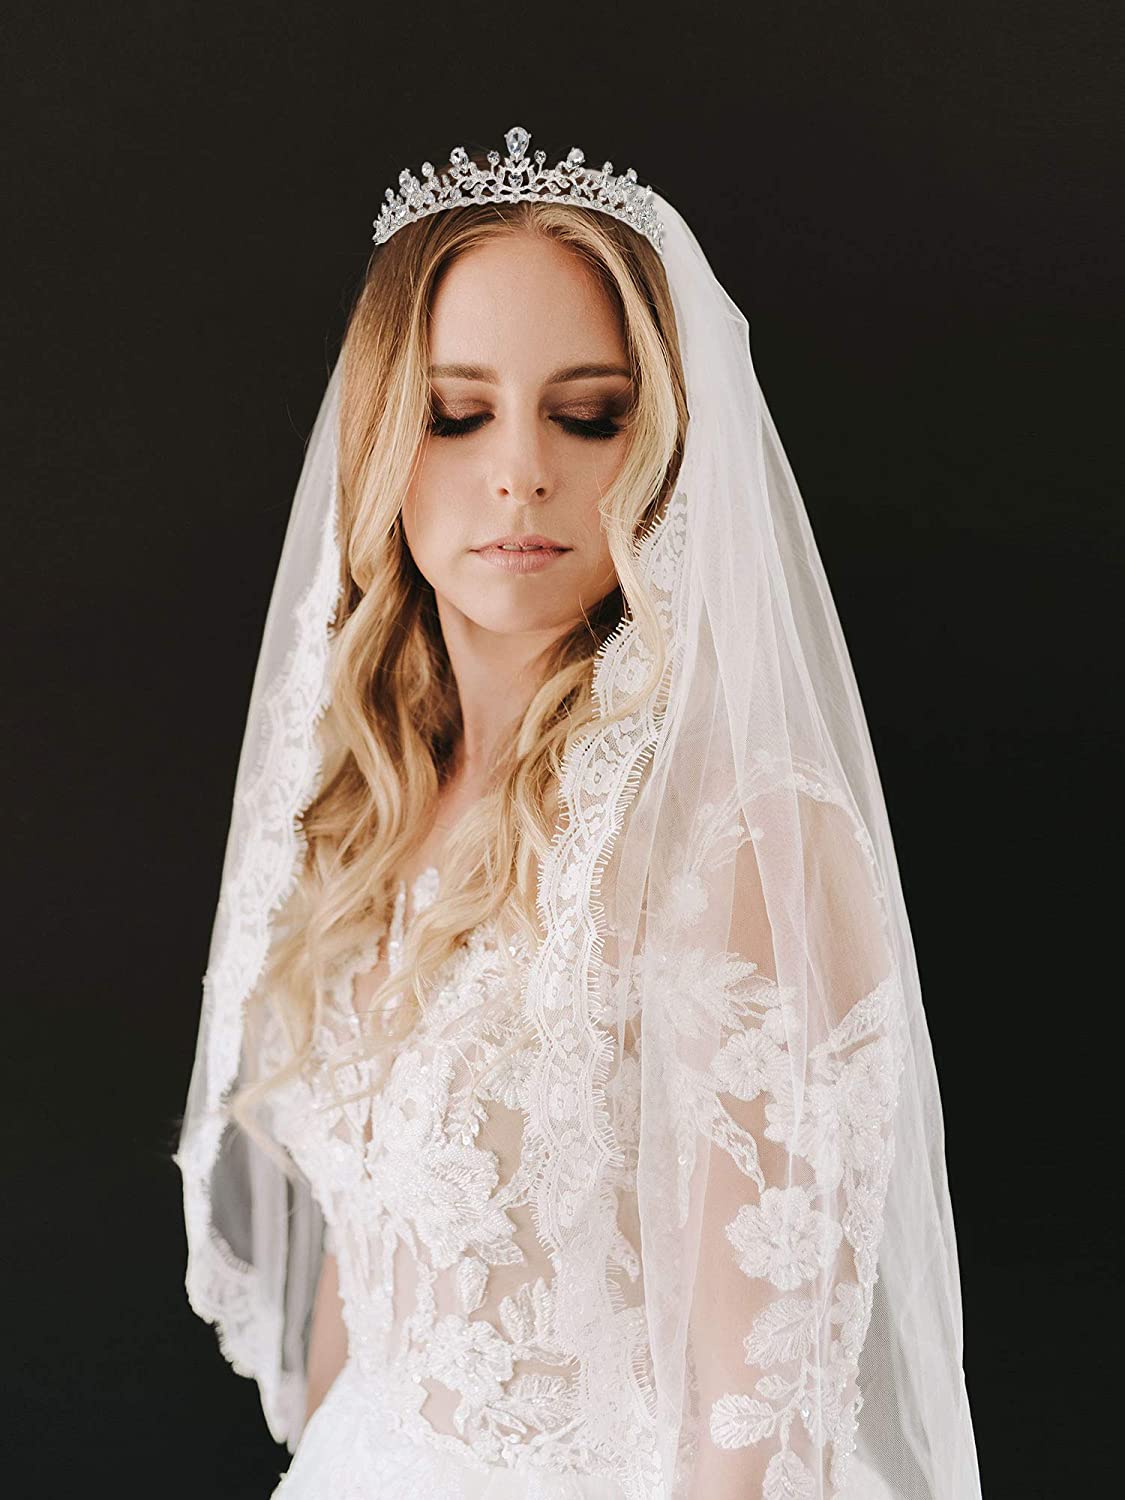 Crystal Wedding Tiara  Bridal Veil Set,Wedding Headband and Lace Fingertip  Veil for Brides